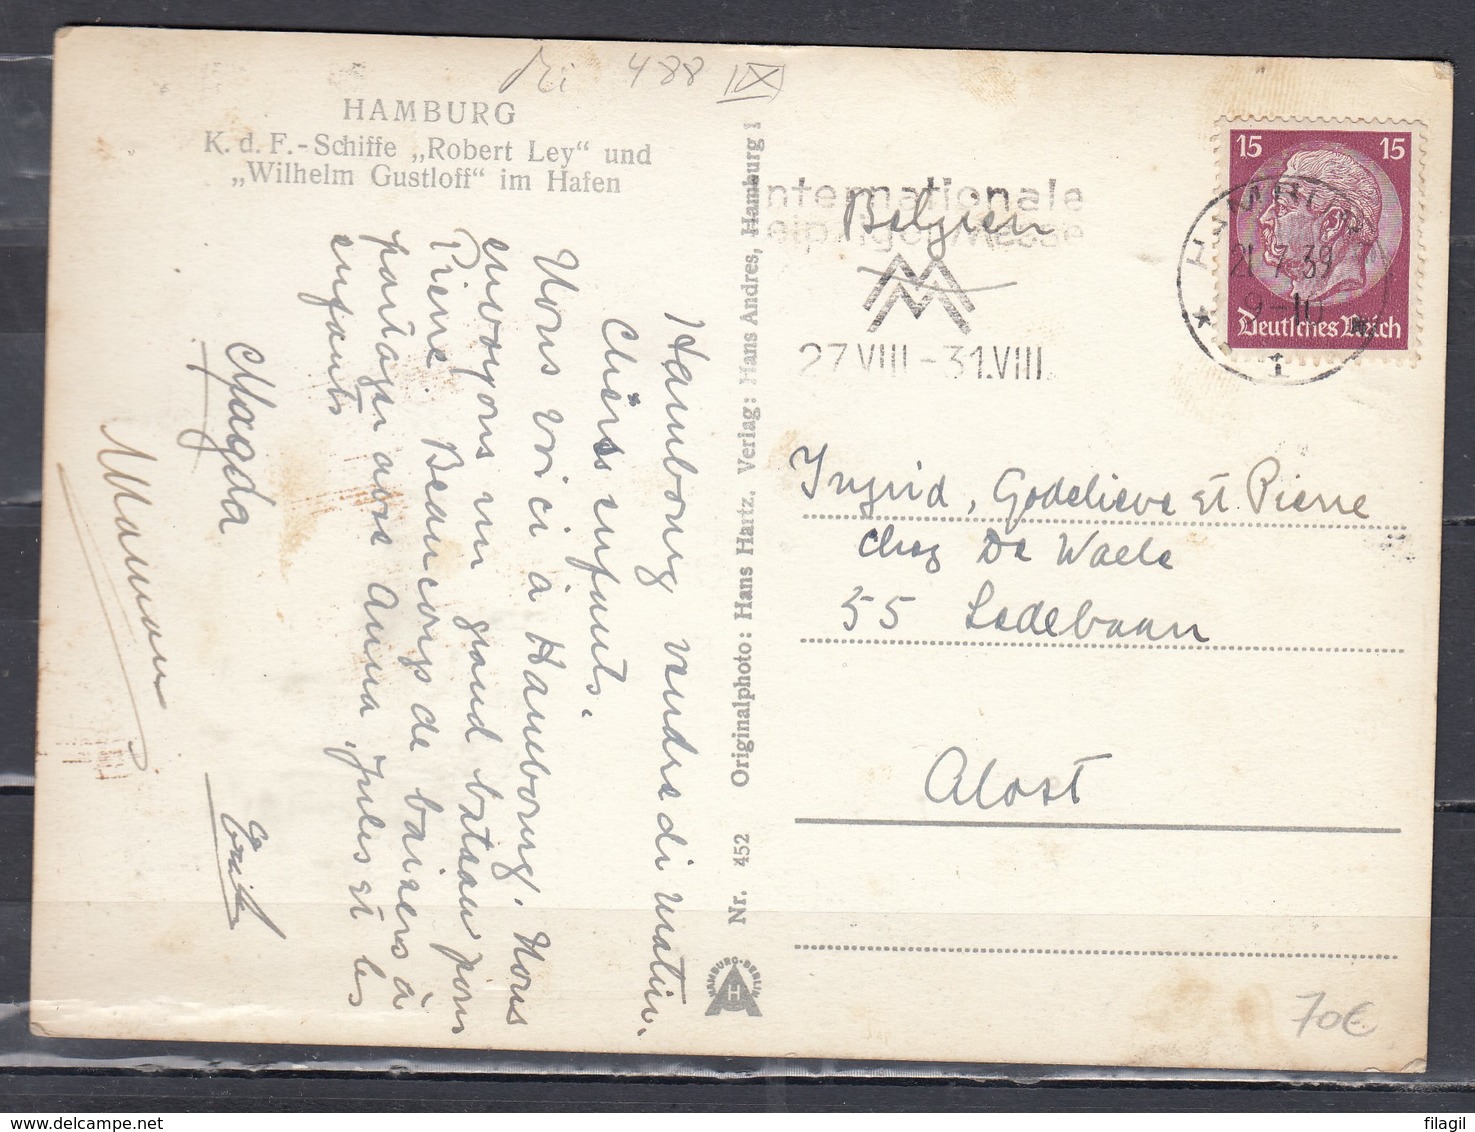 Postkarte Nr451 Von Hamburg 1 (sterstempel) Nach Alost (Nr 83) - Briefe U. Dokumente